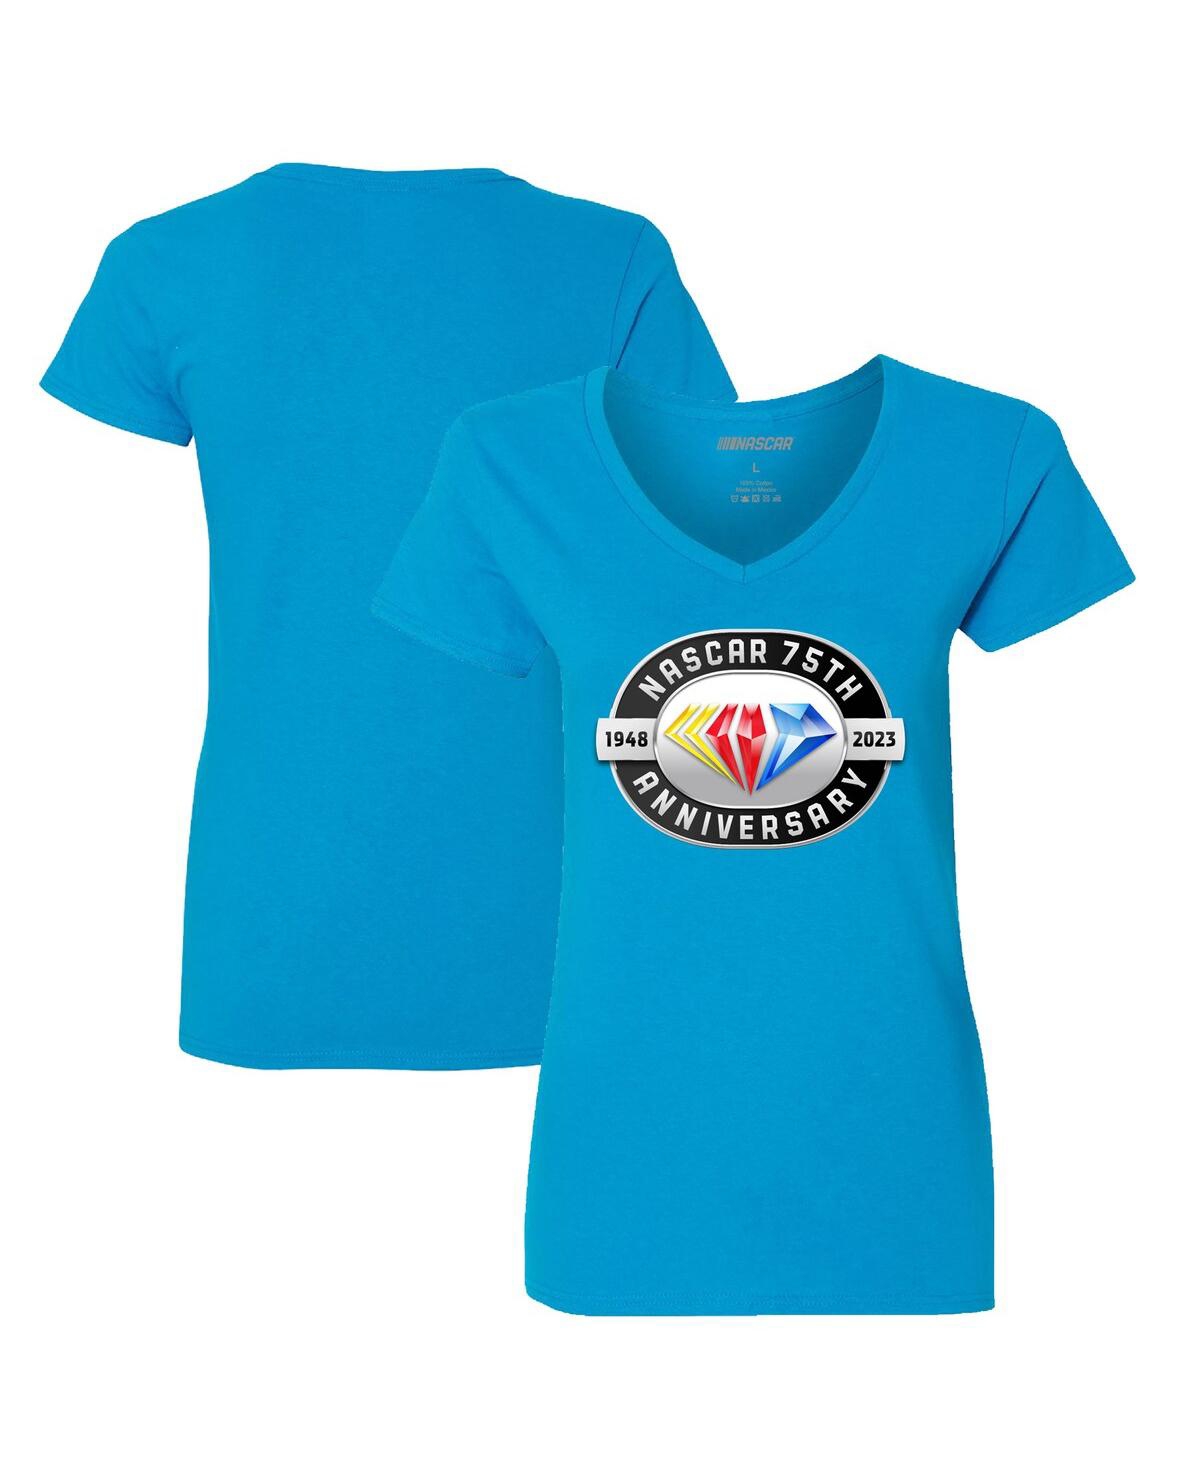 Women's Checkered Flag Sports Light Blue Nascar 75th Anniversary V-Neck T-shirt - Light Blue